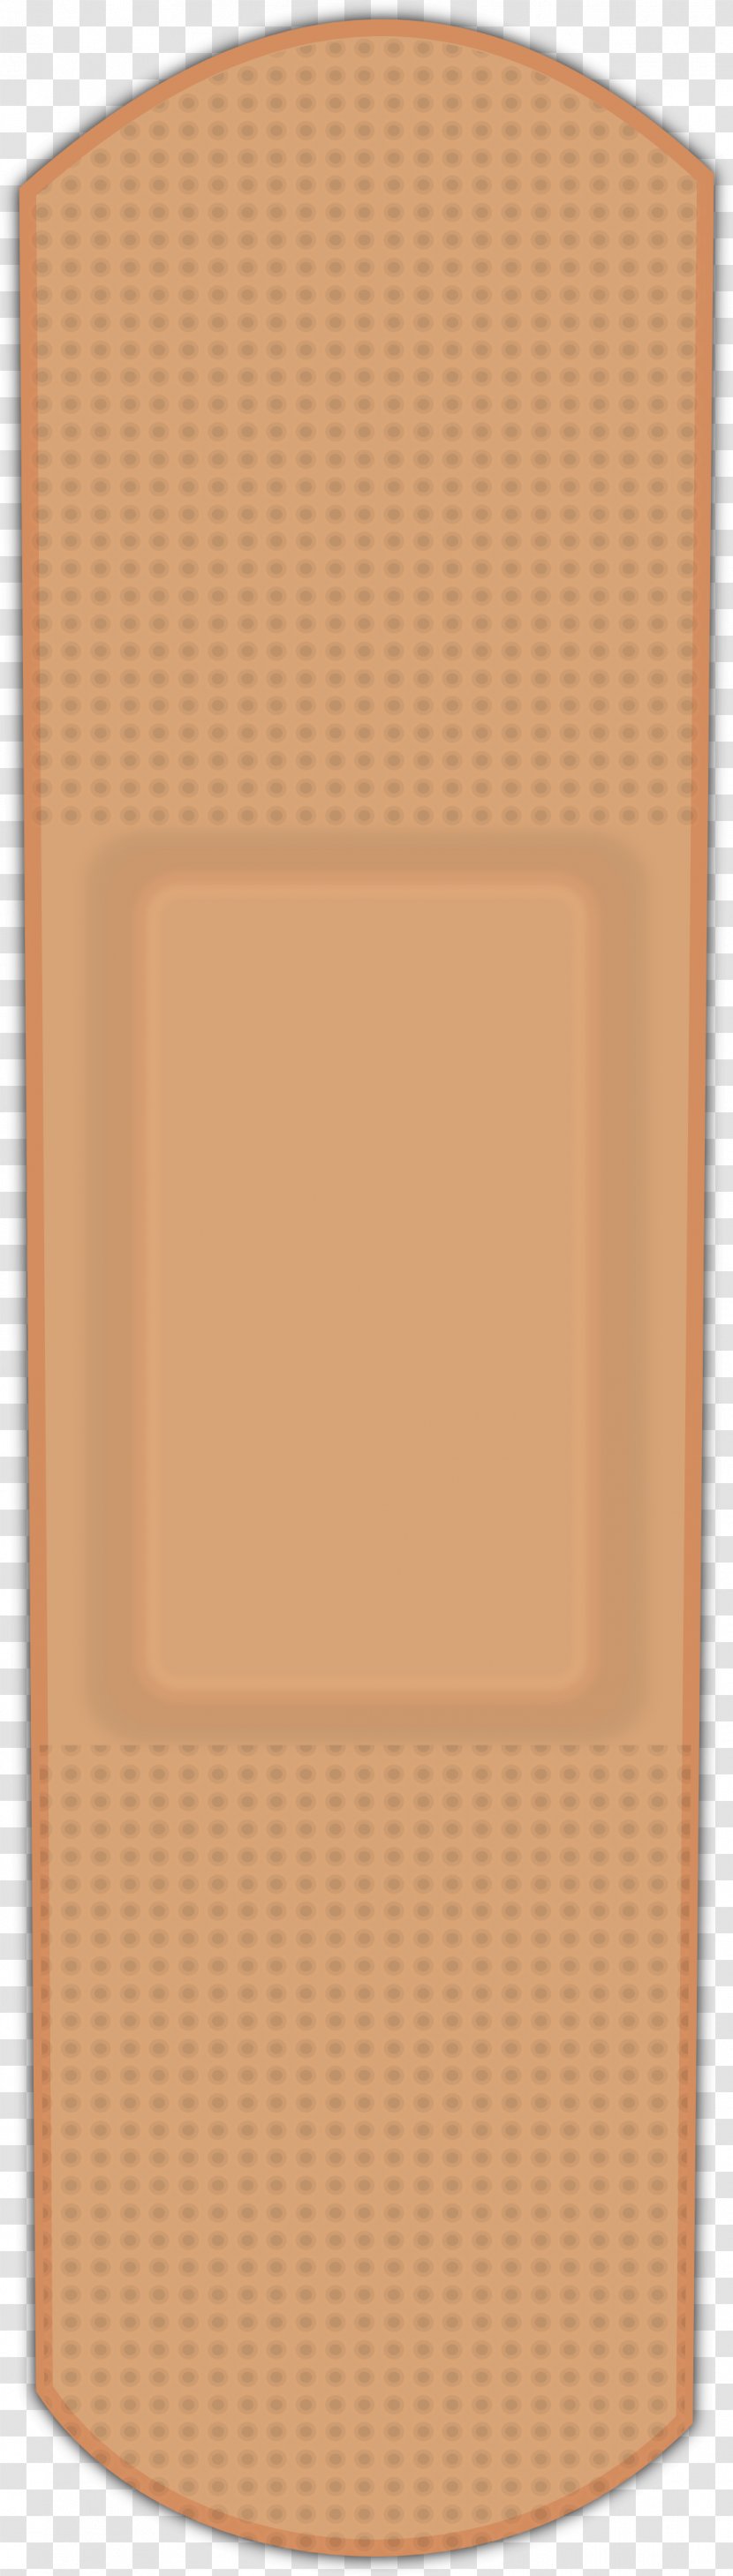 Wood Stain Varnish Angle - Brown - Bandage Transparent PNG